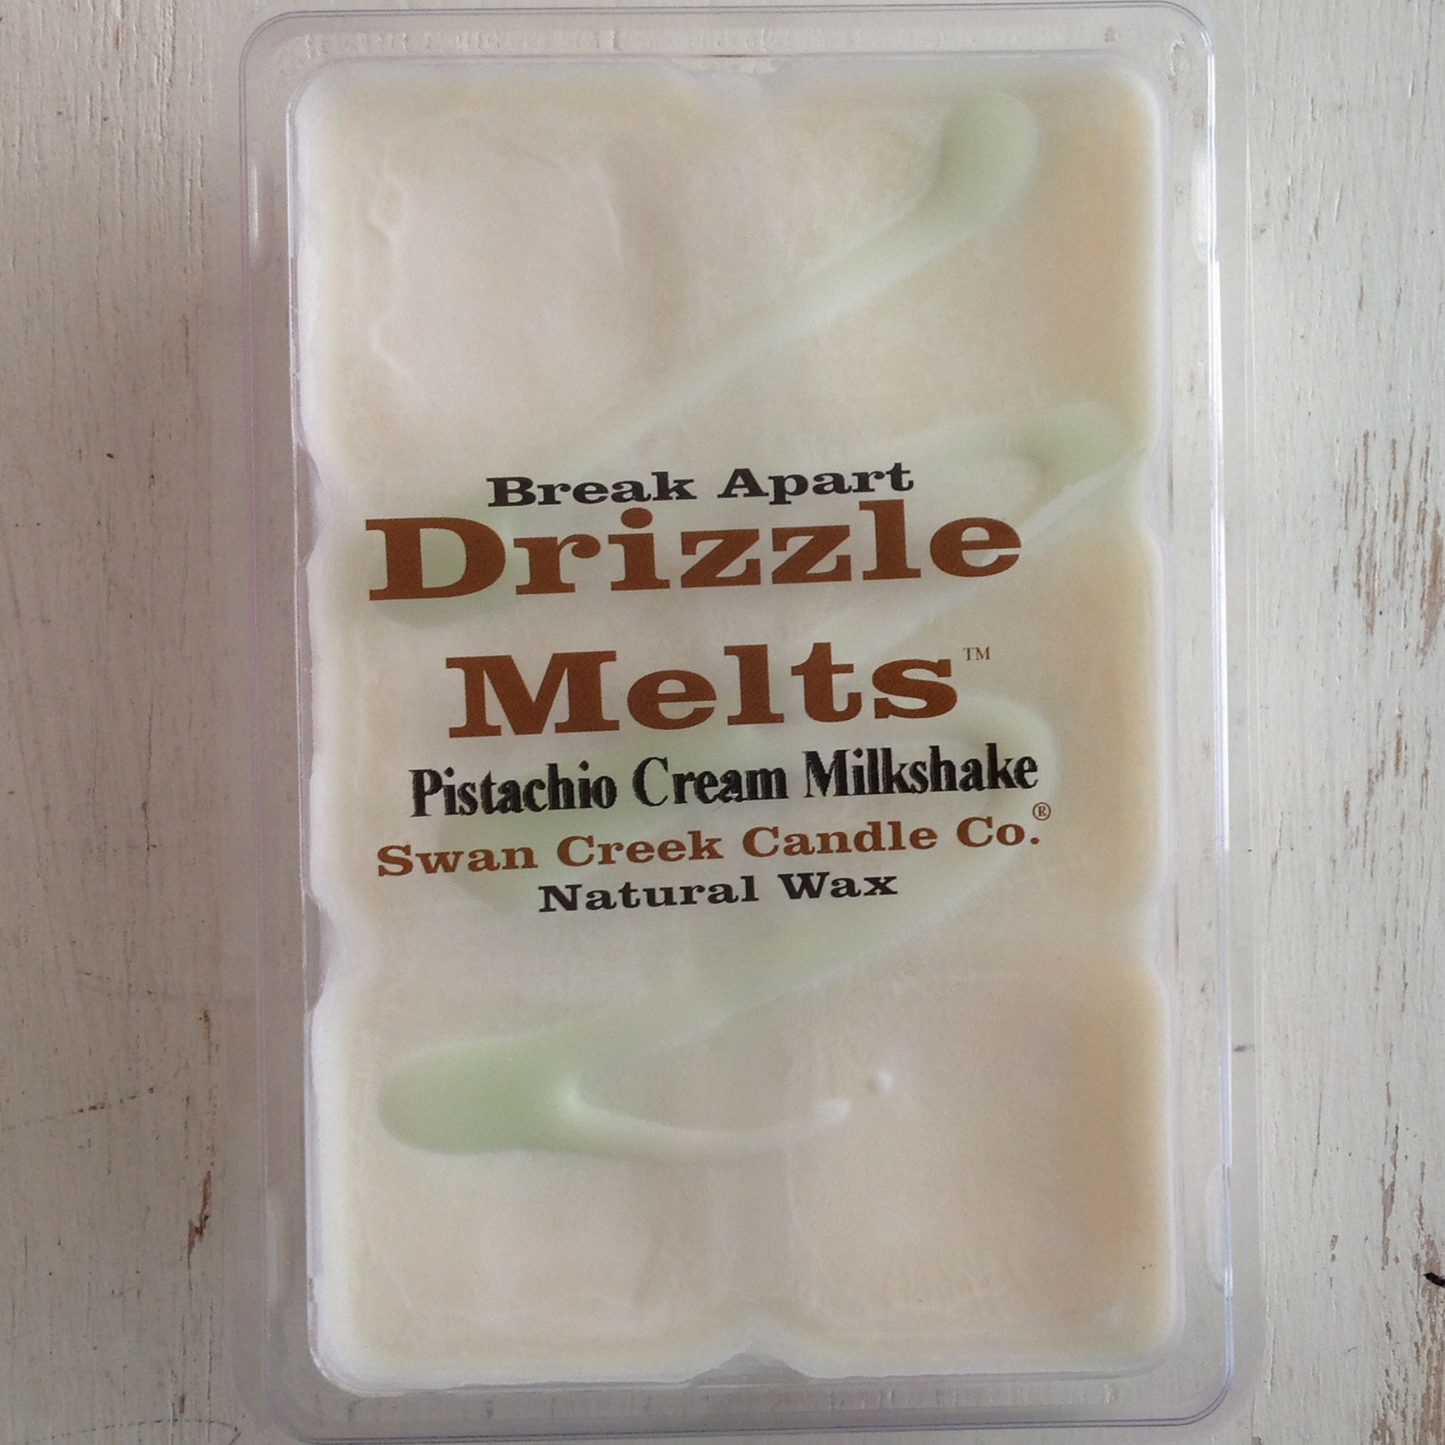 Swan Creek Candle Company Herbal Drizzle Wax Melts Pistachio Cream Milkshake